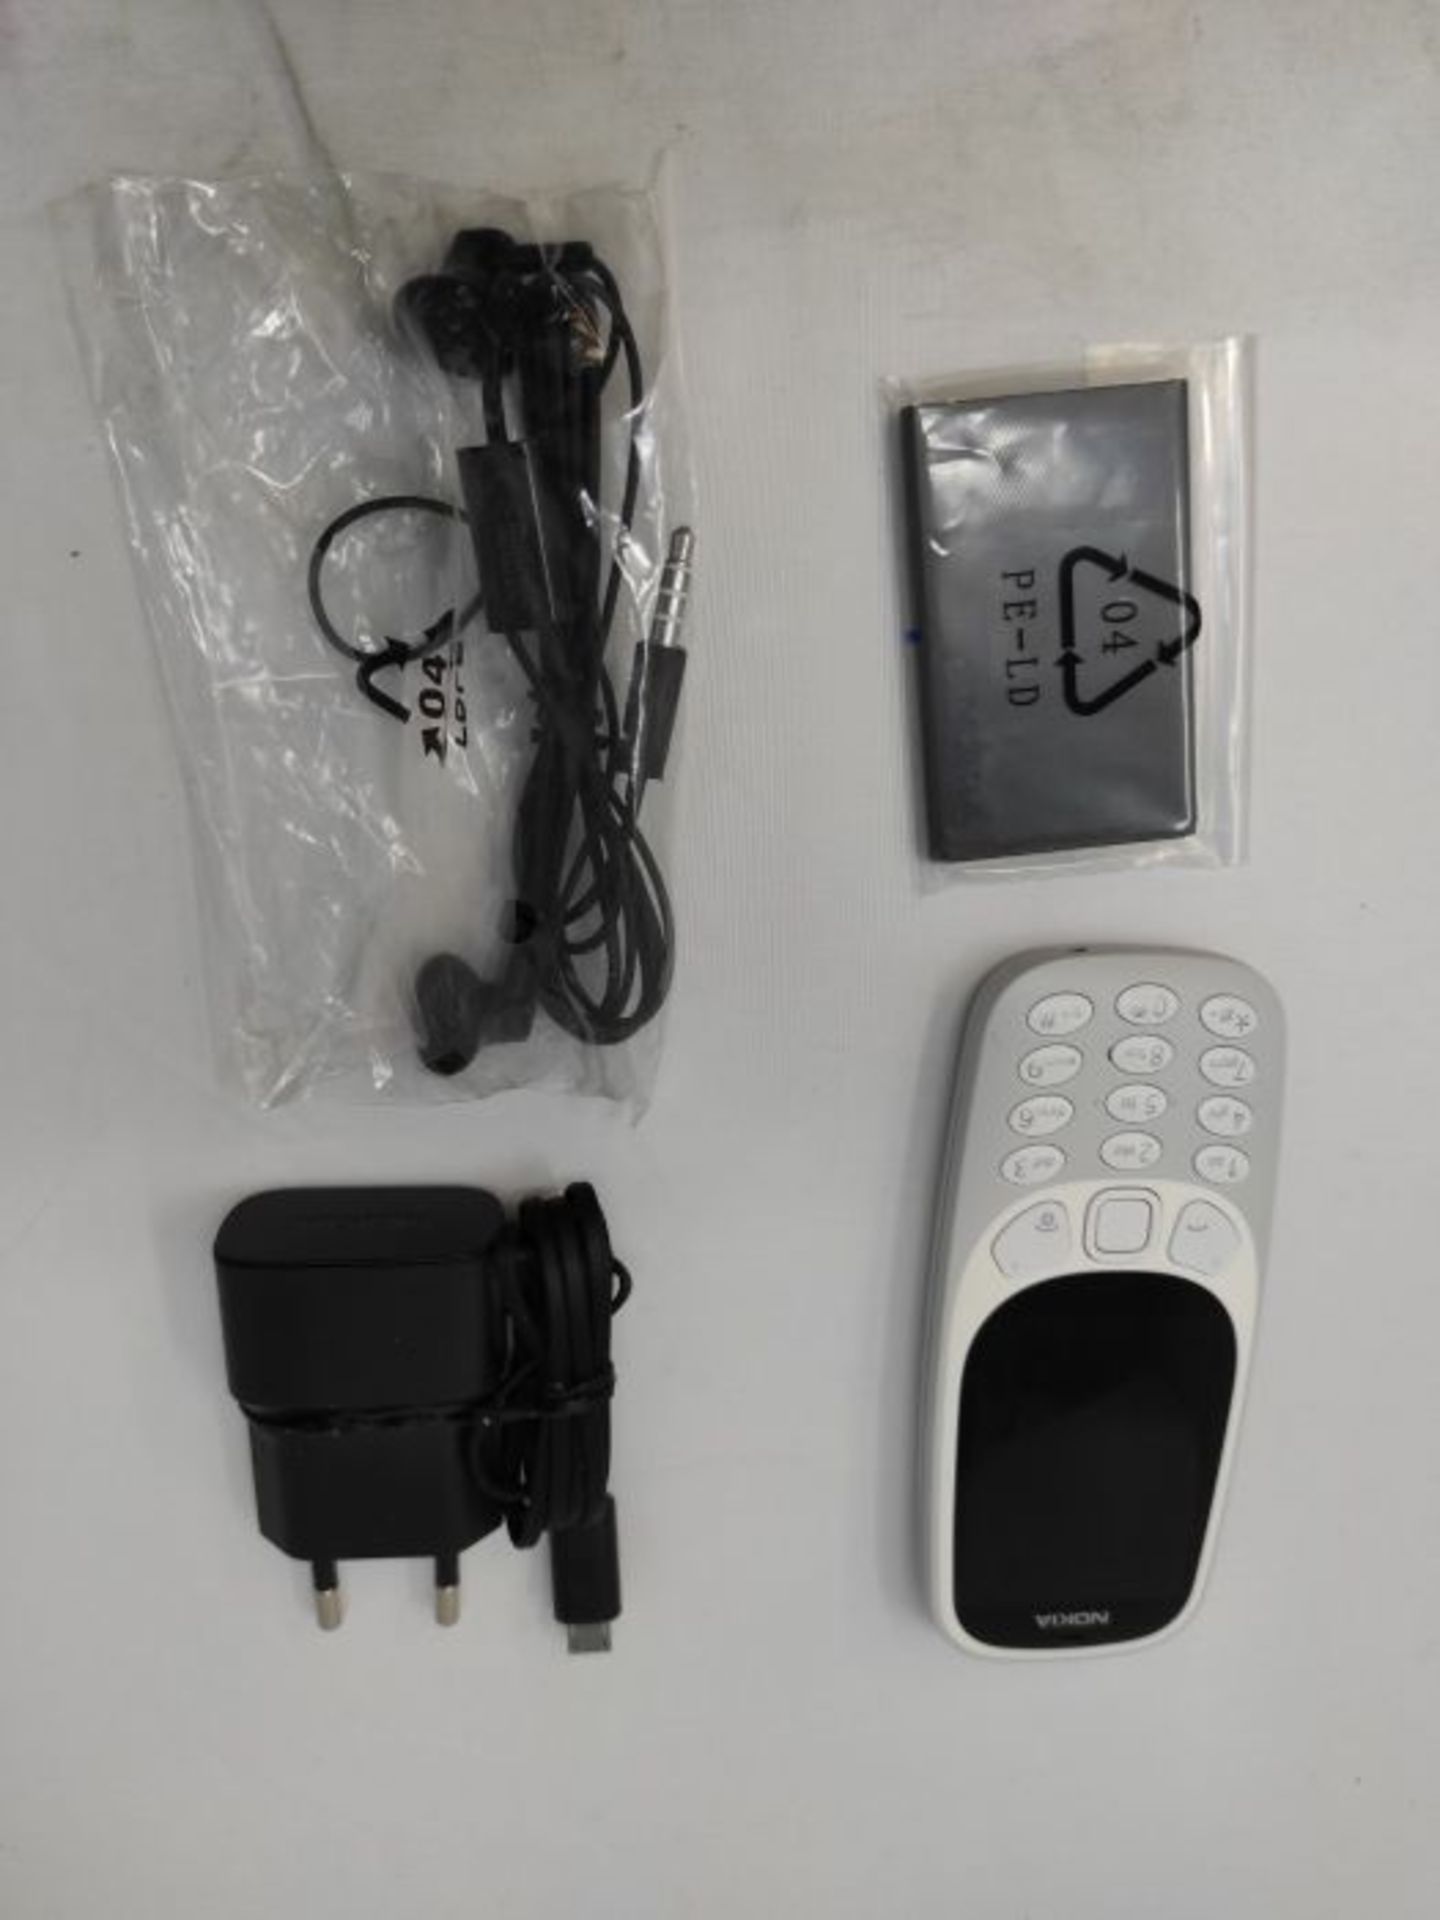 RRP £55.00 Nokia 3310 2G Mobiltelefon (2,4 Zoll Farbdisplay, 2MP Kamera, Bluetooth, Radio, MP3 Pl - Image 3 of 3